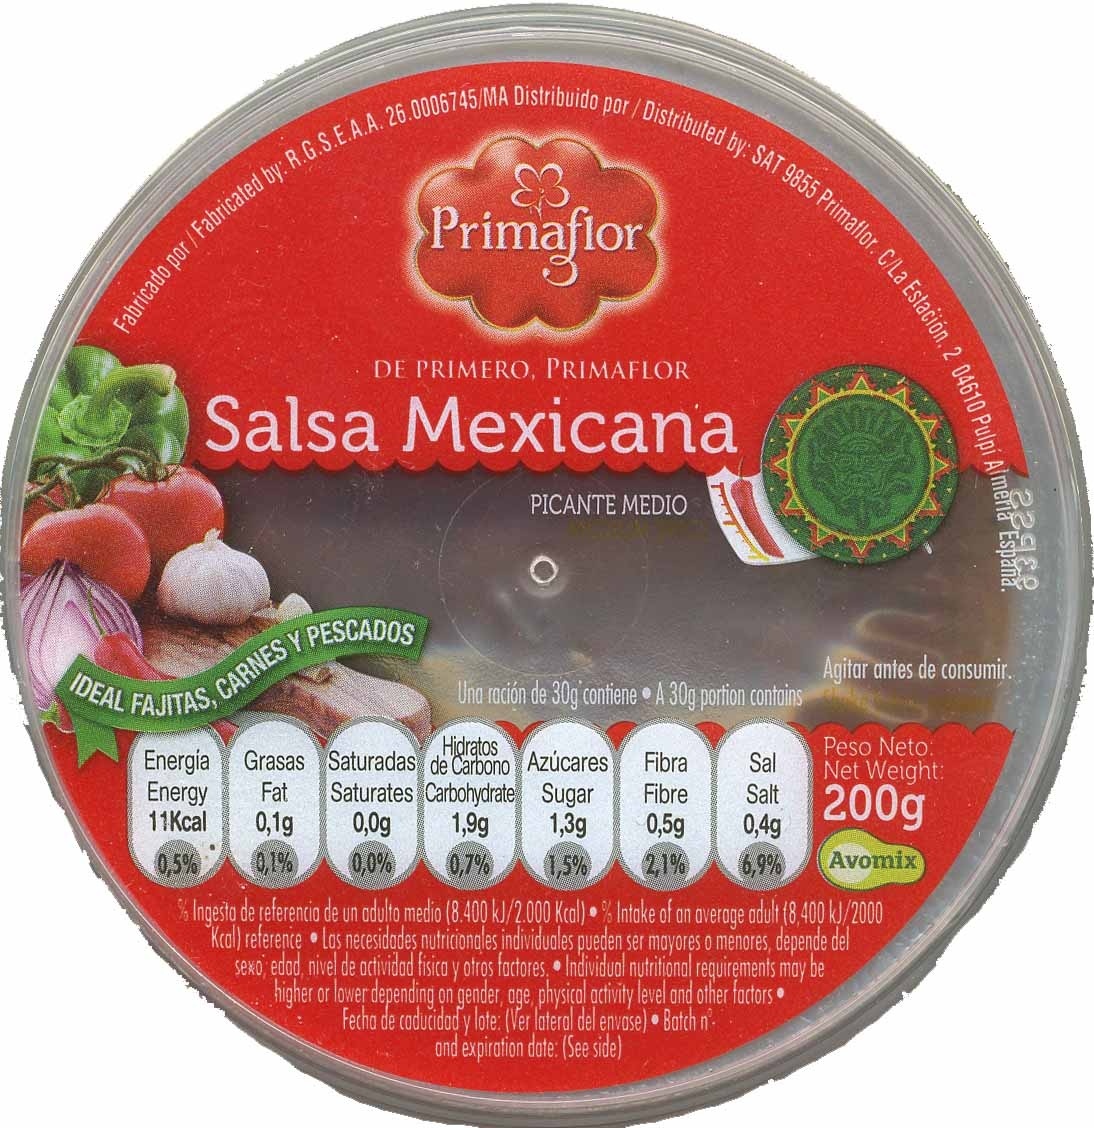 Salsa mexicana "Primaflor" - Product - es